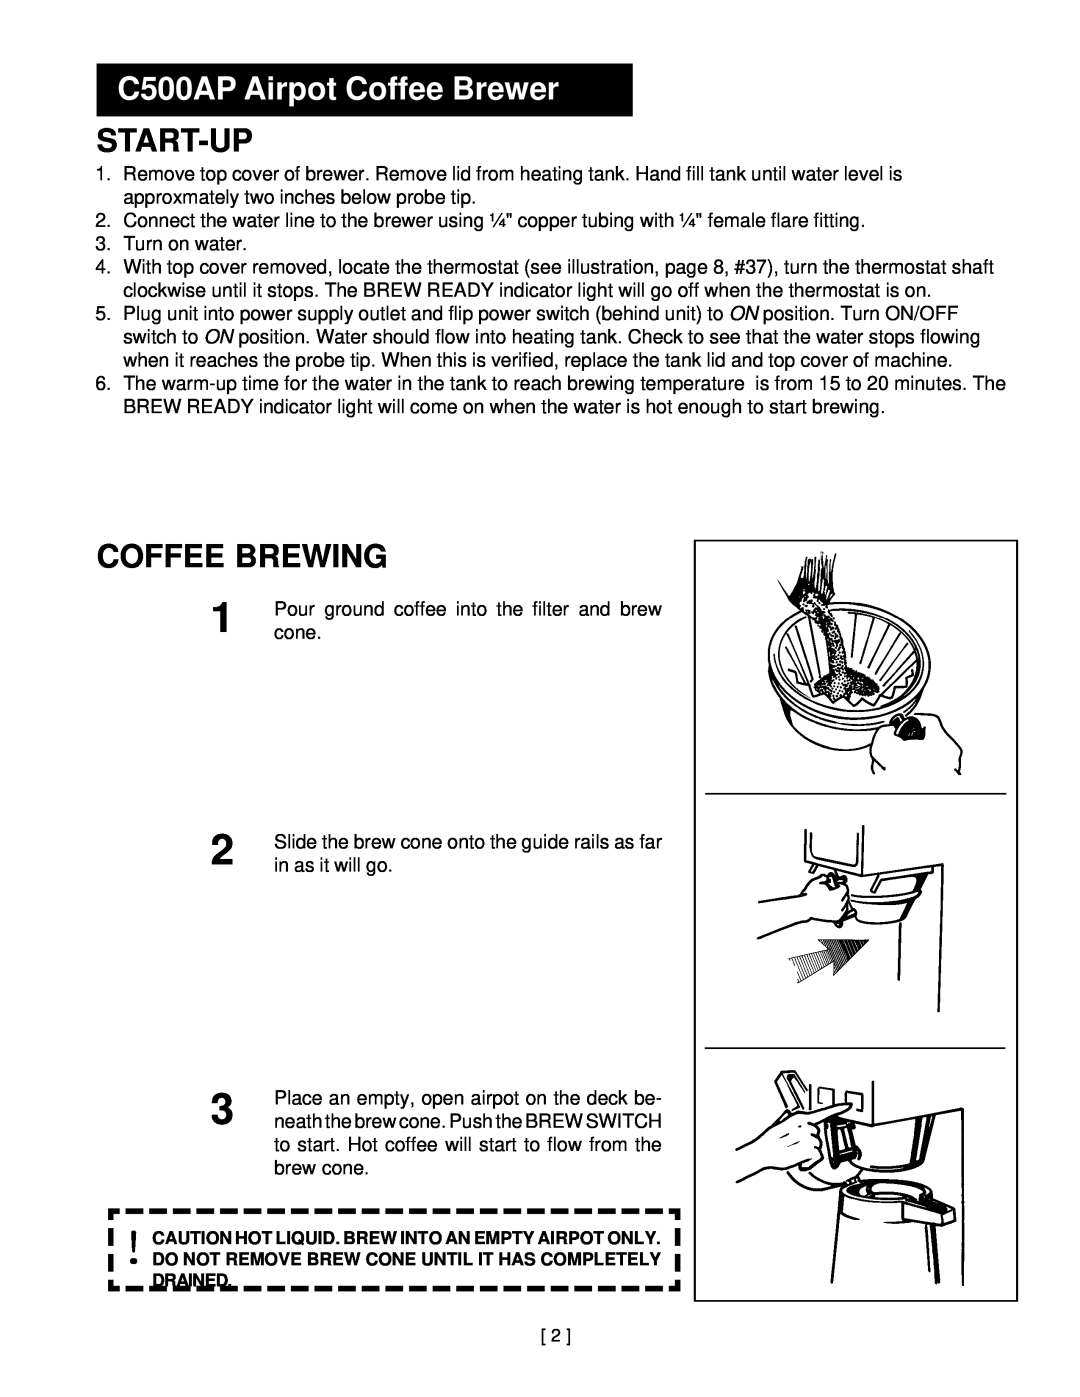 Wibur Curtis Company C500APT service manual Start-Up, Coffee Brewing, C500AP Airpot Coffee Brewer 